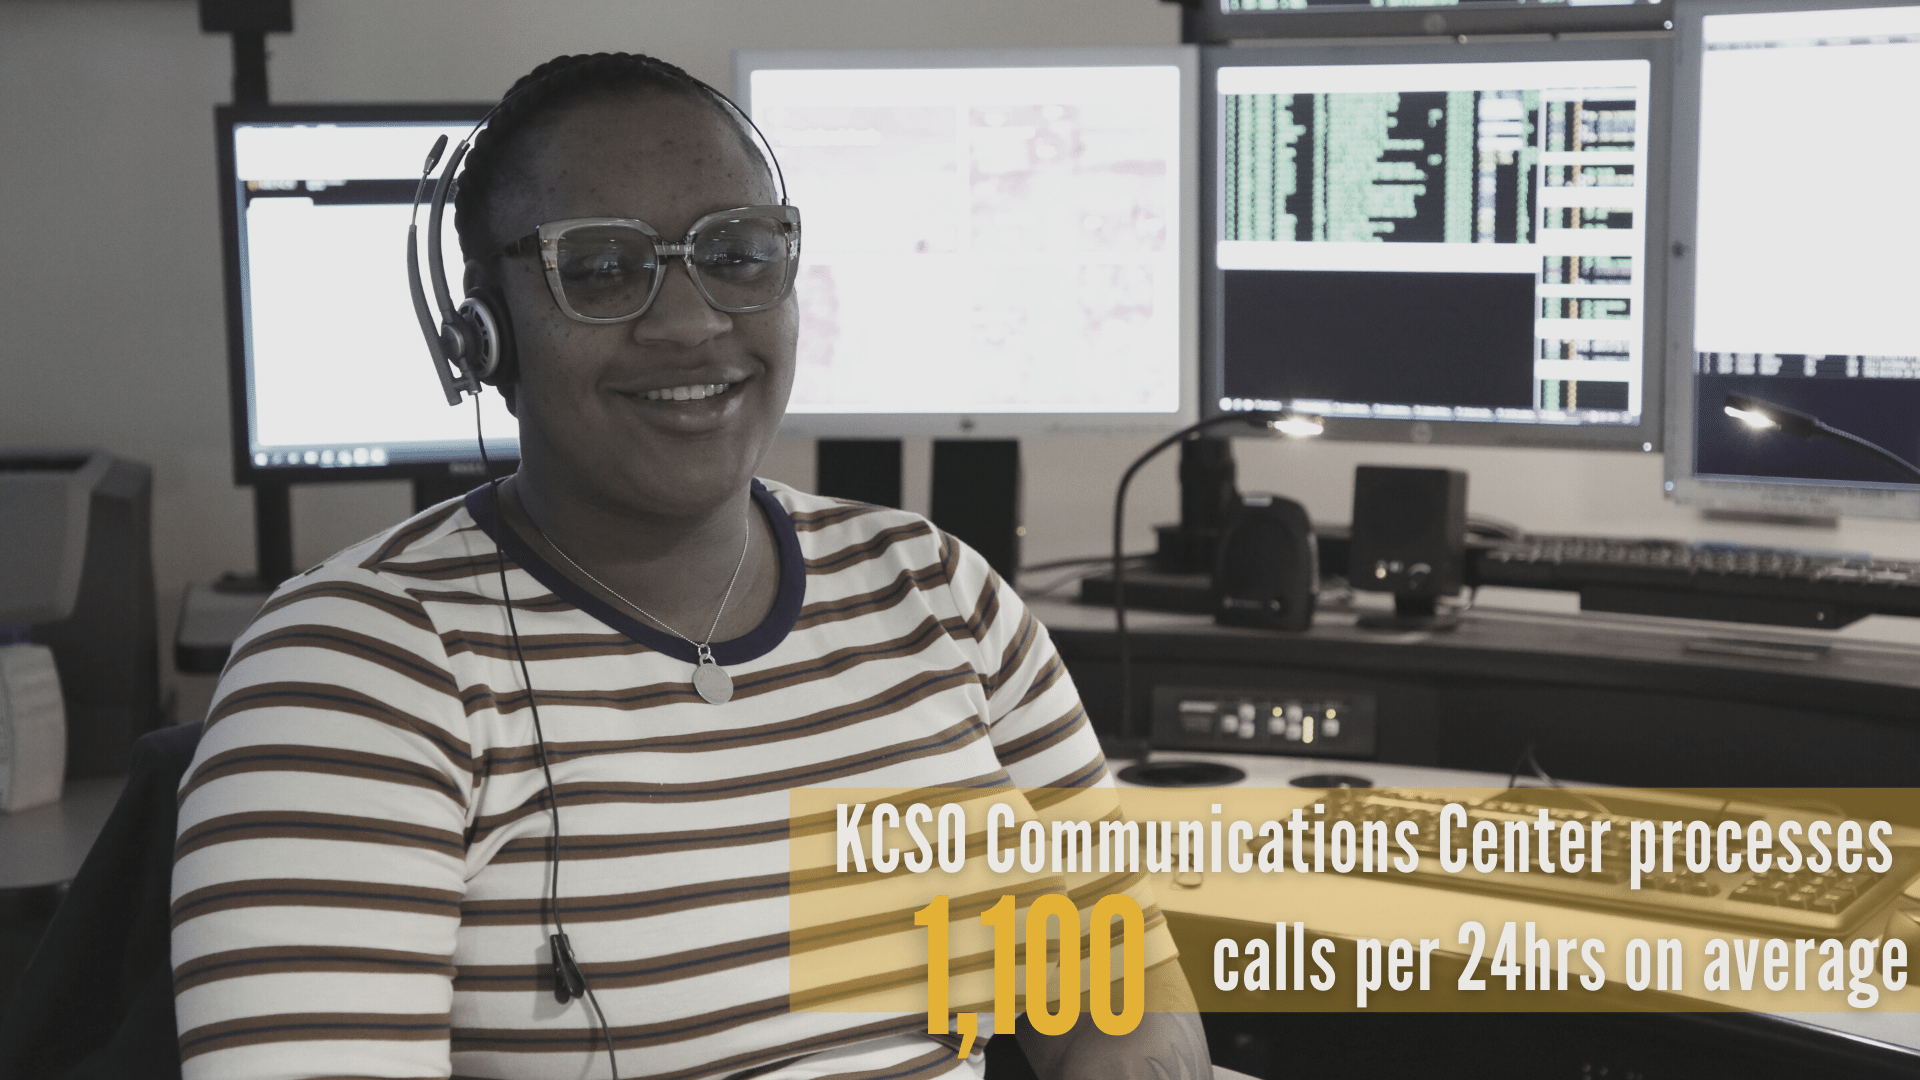 KCSO processes 1,100 calls per 24 hours on average